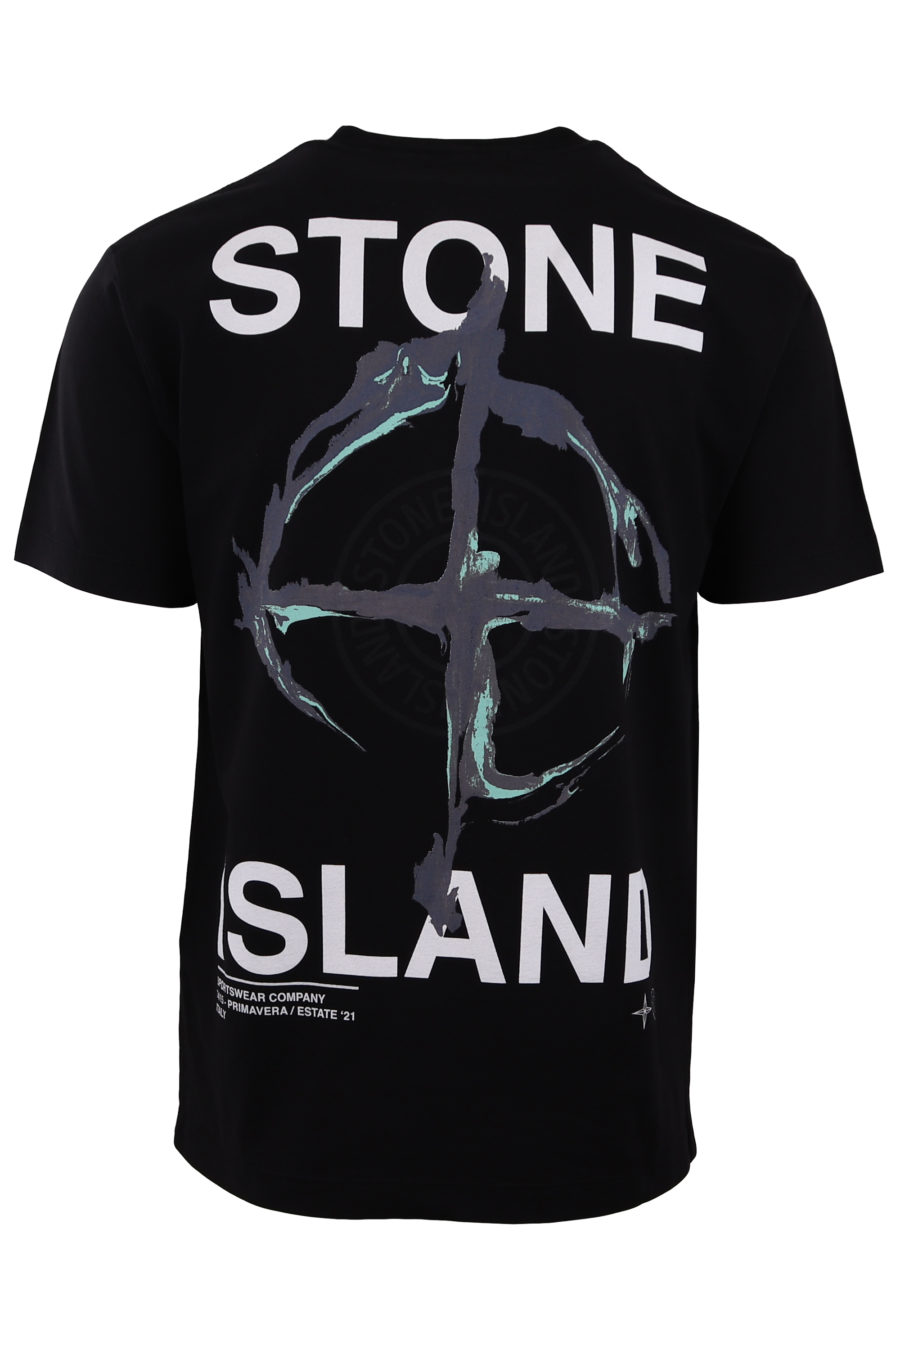 T-shirt Stone Island schwarz mit kleinem Logo - IMG 3189